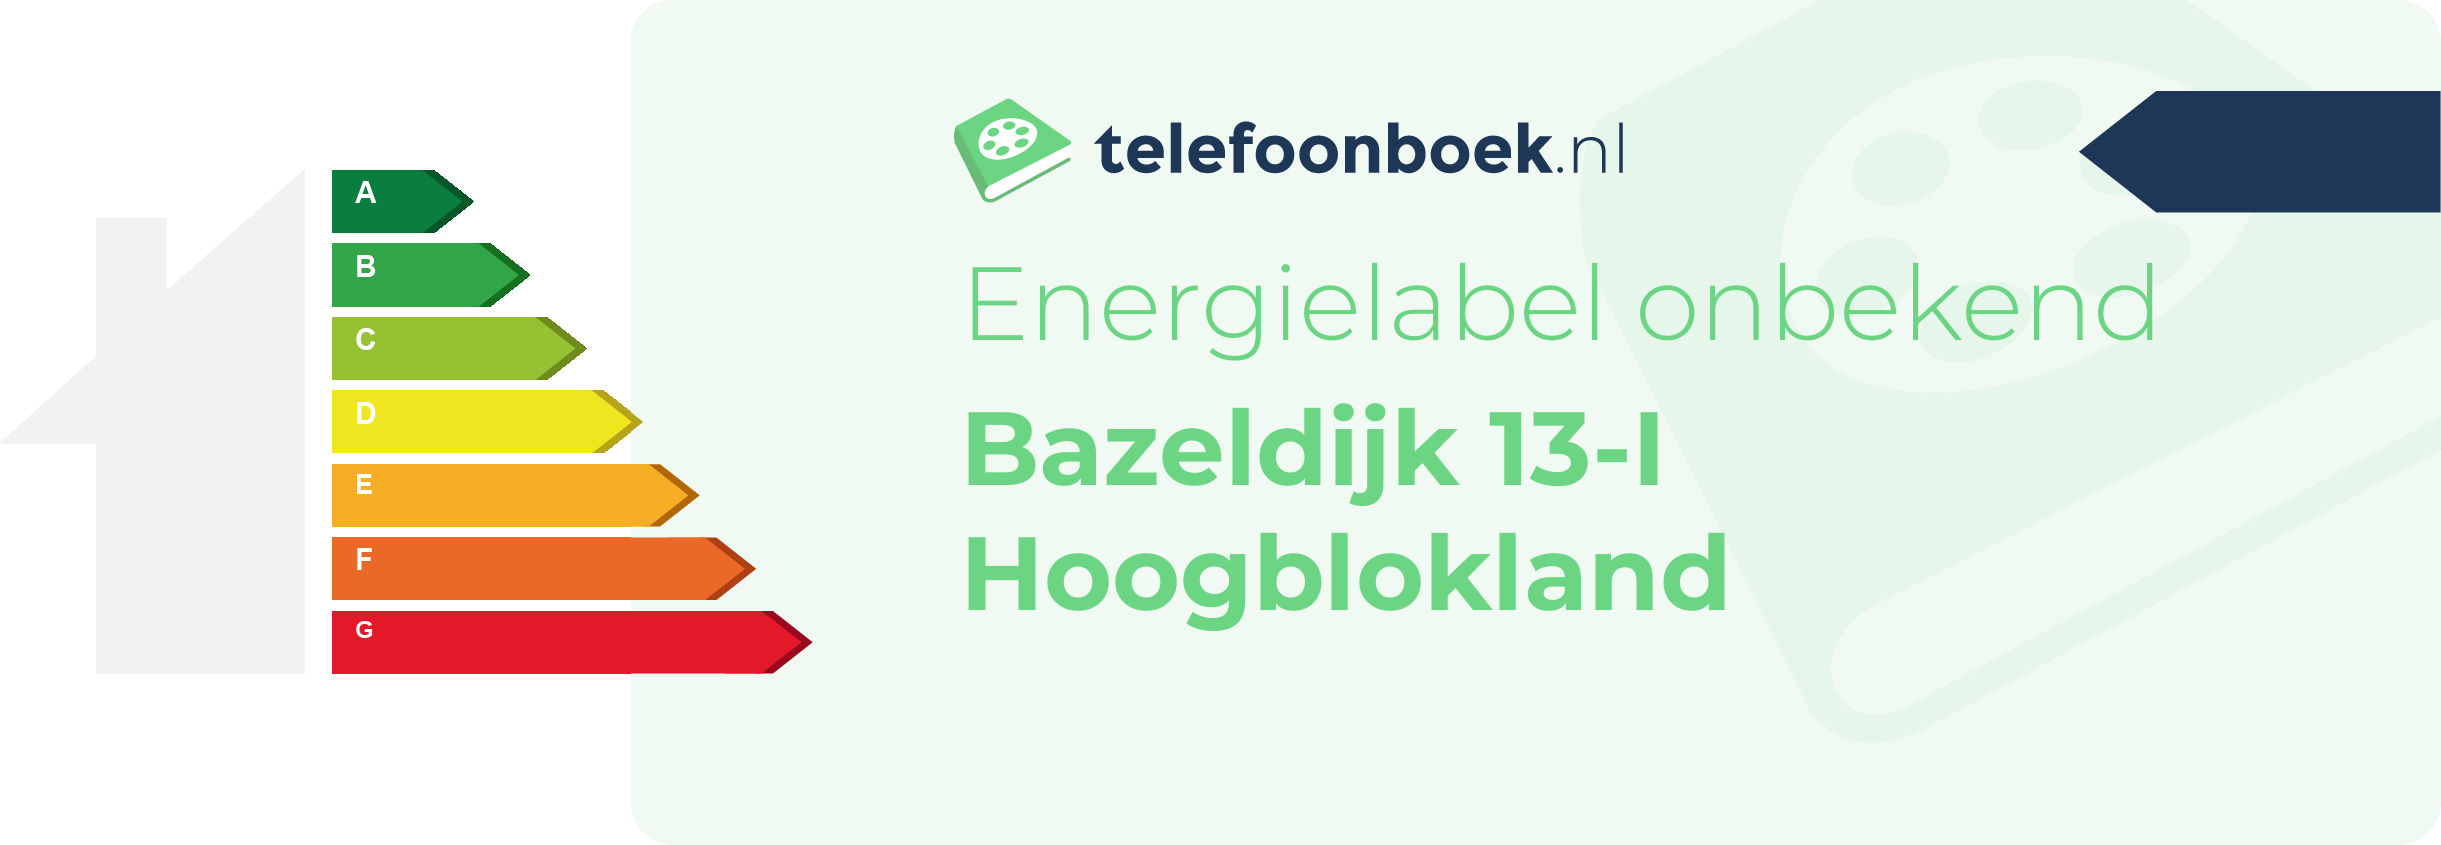 Energielabel Bazeldijk 13-I Hoogblokland